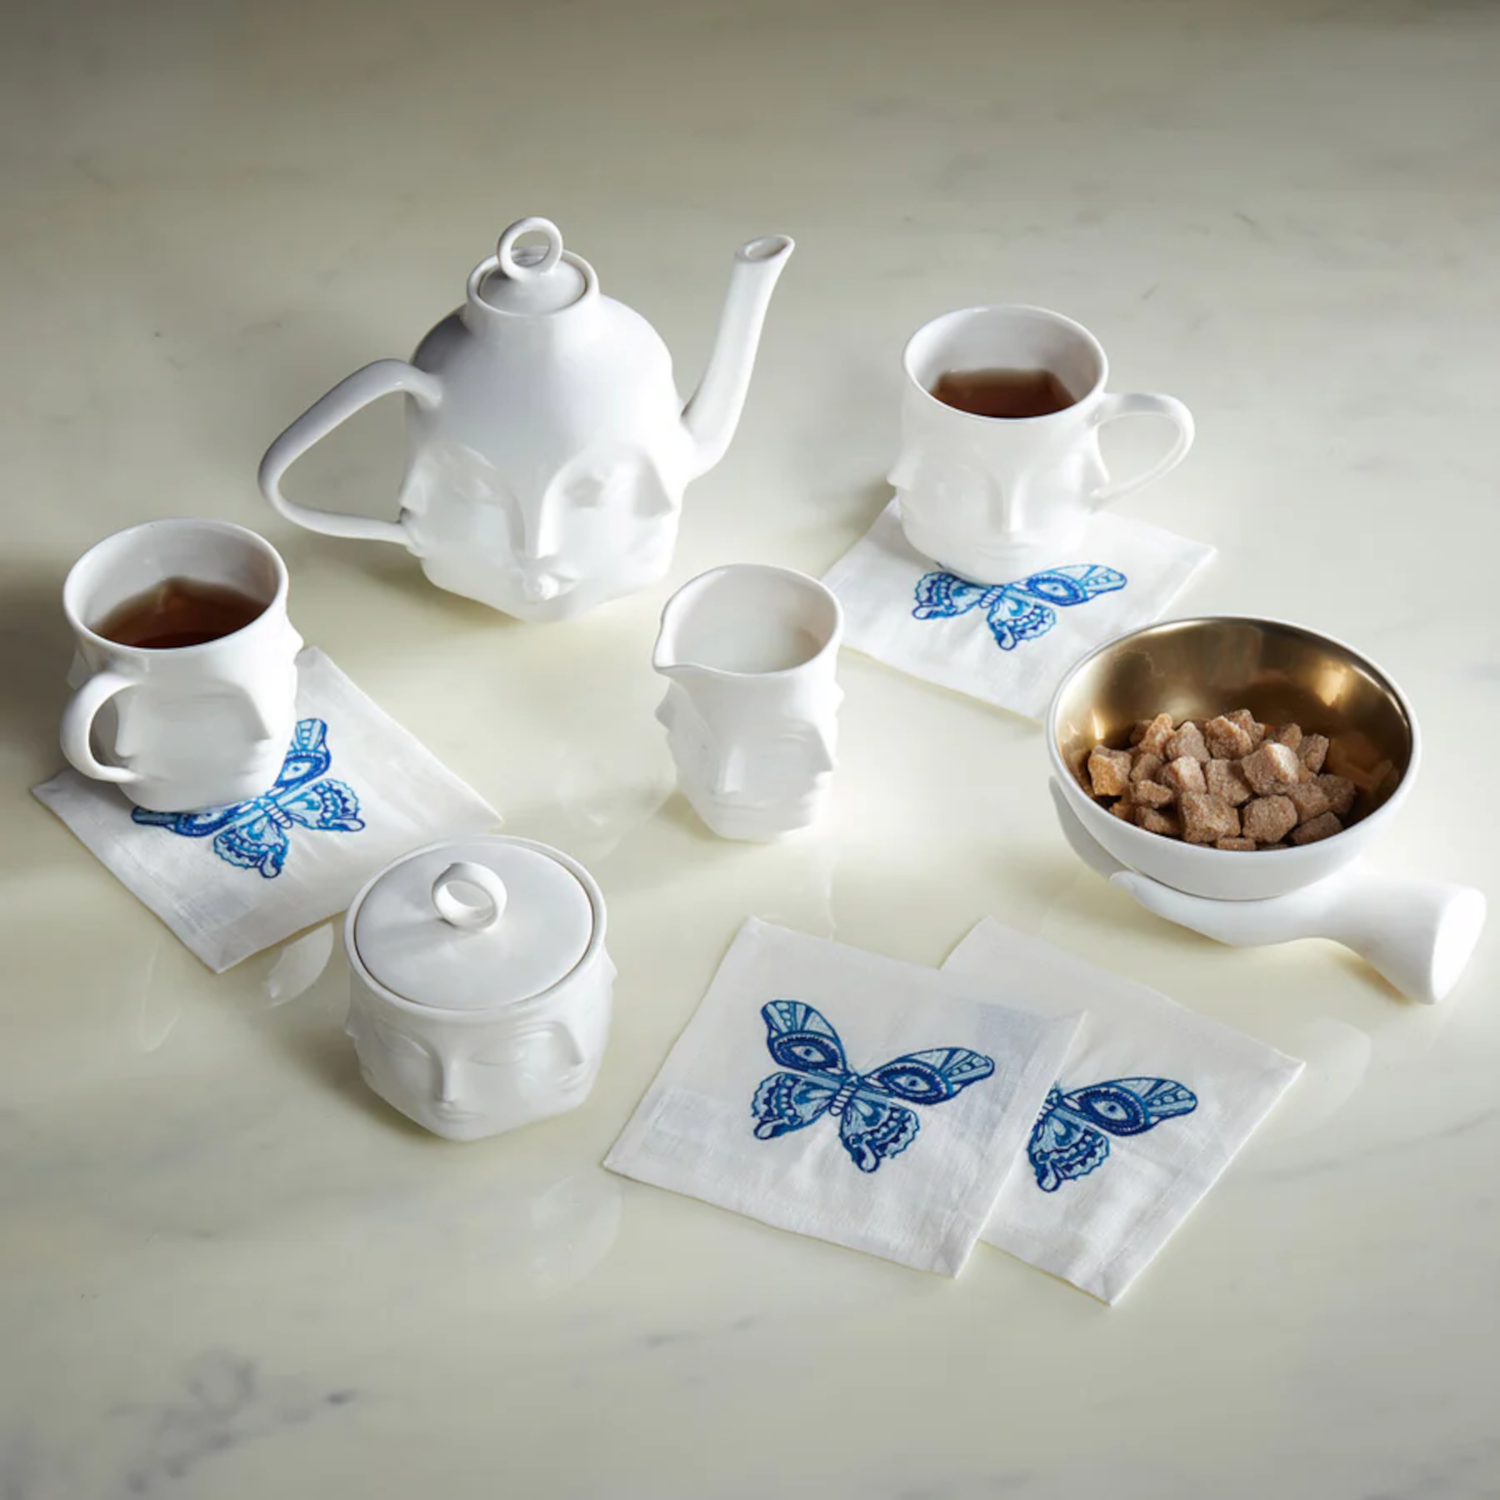 Teapot DORA MAAR made of porcelain